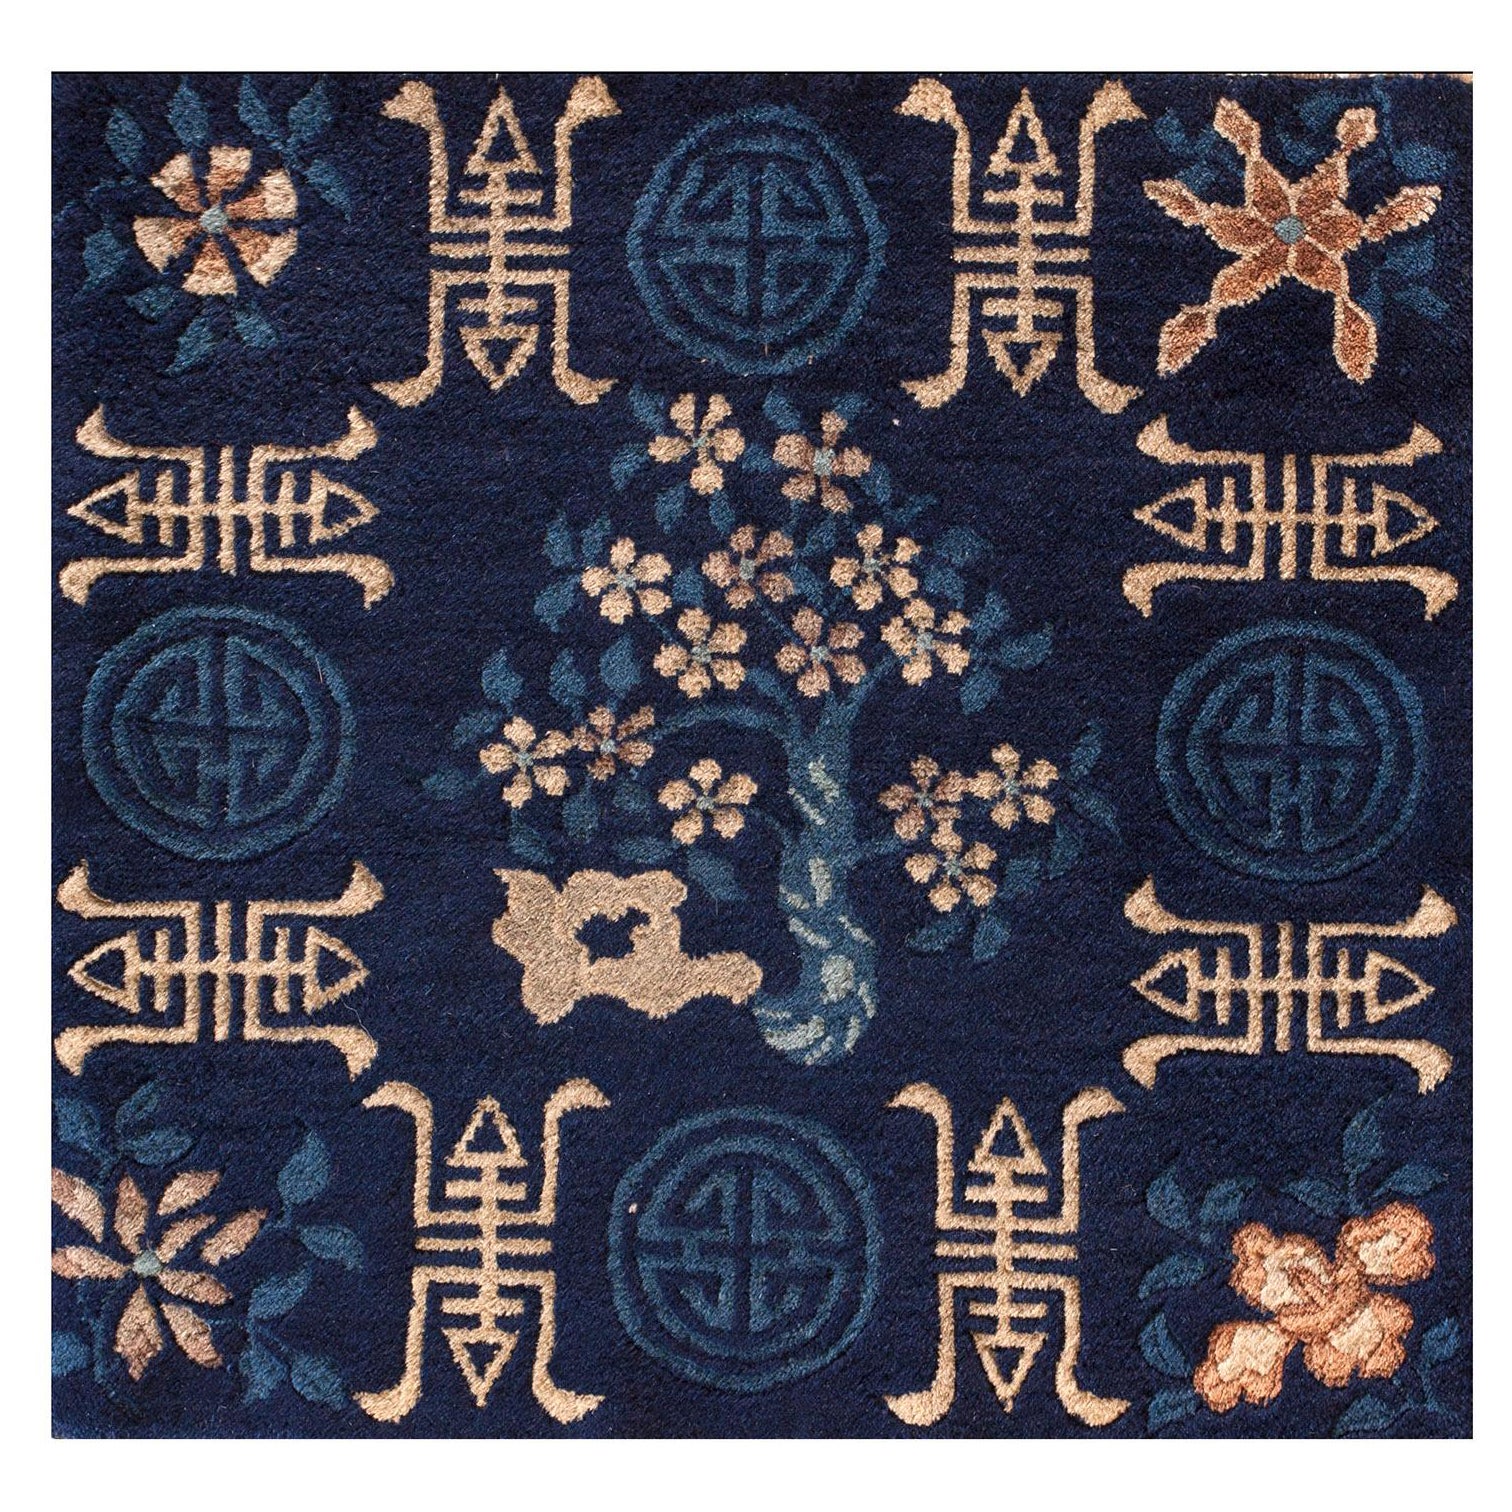 Late 19th Century Chinese Peking Carpet ( 2' x 2' - 62 x 62 )